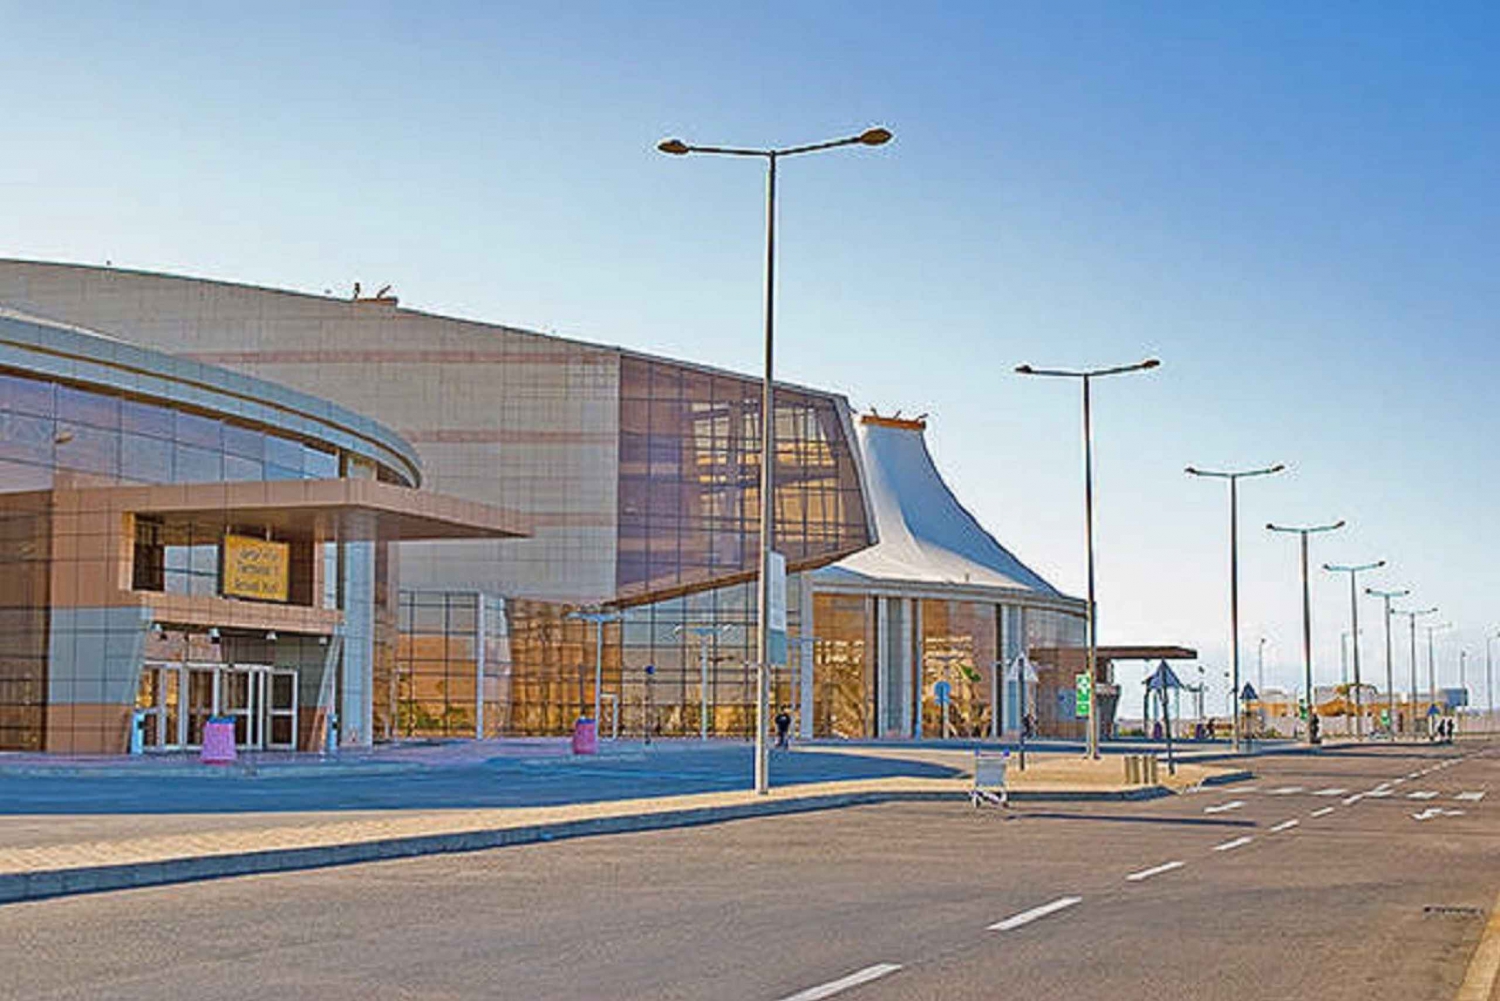 Sharm el-Sheikh: Airport VIP Business Lounge Access